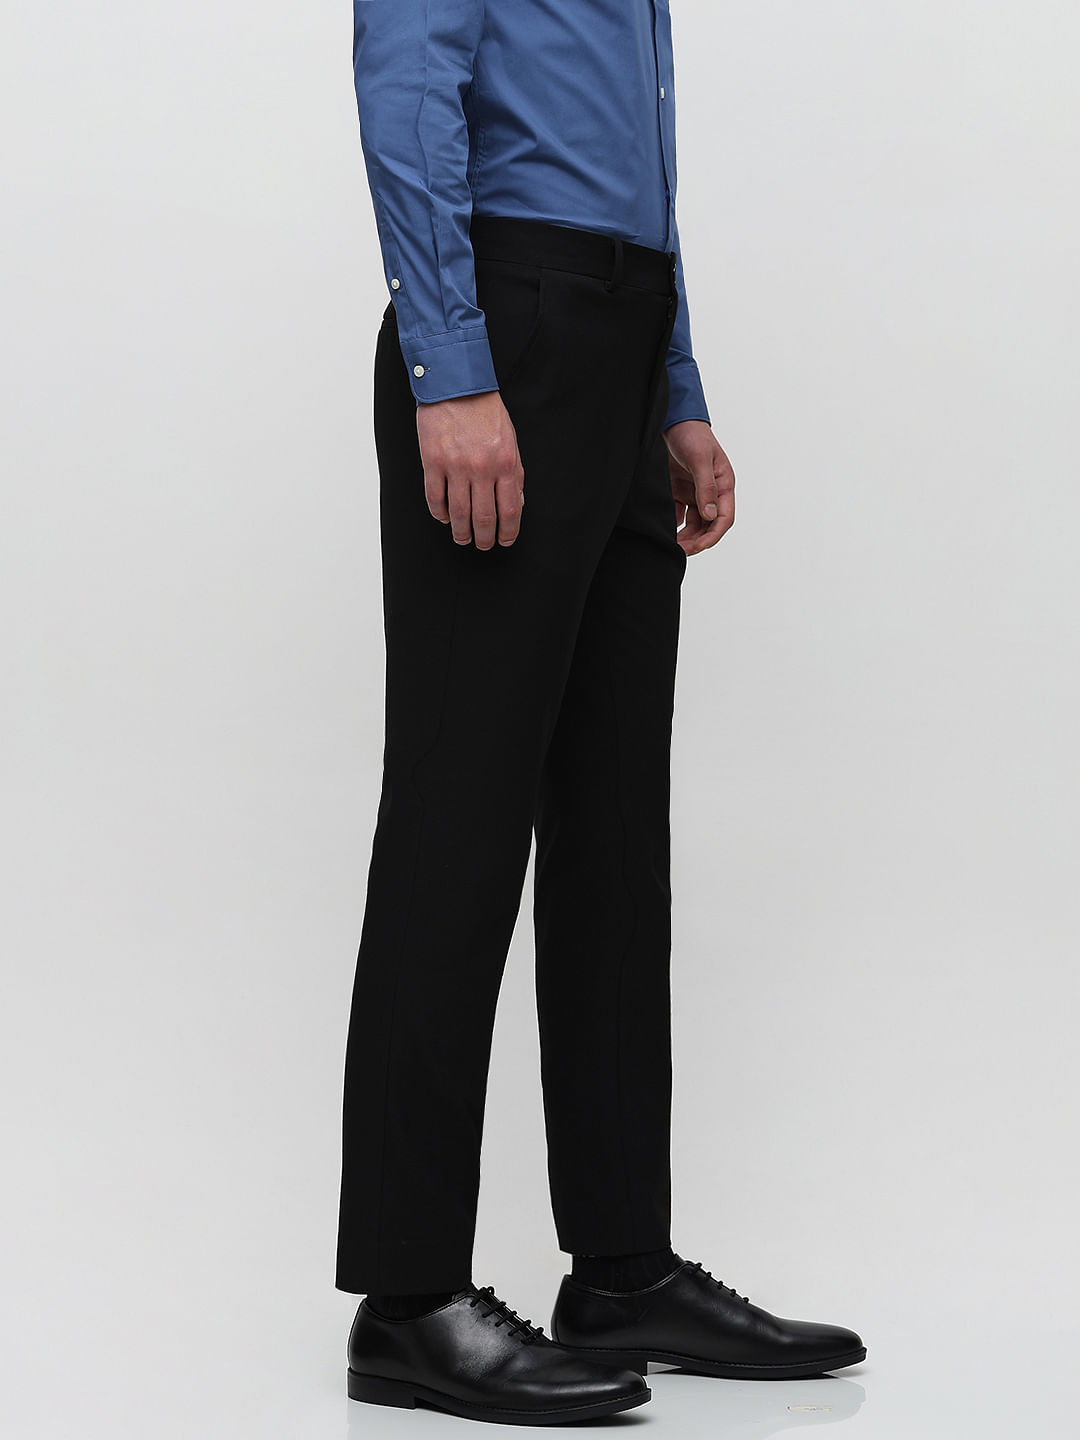 Buy Men's Black Tailored Trousers Formal Online | Next UK